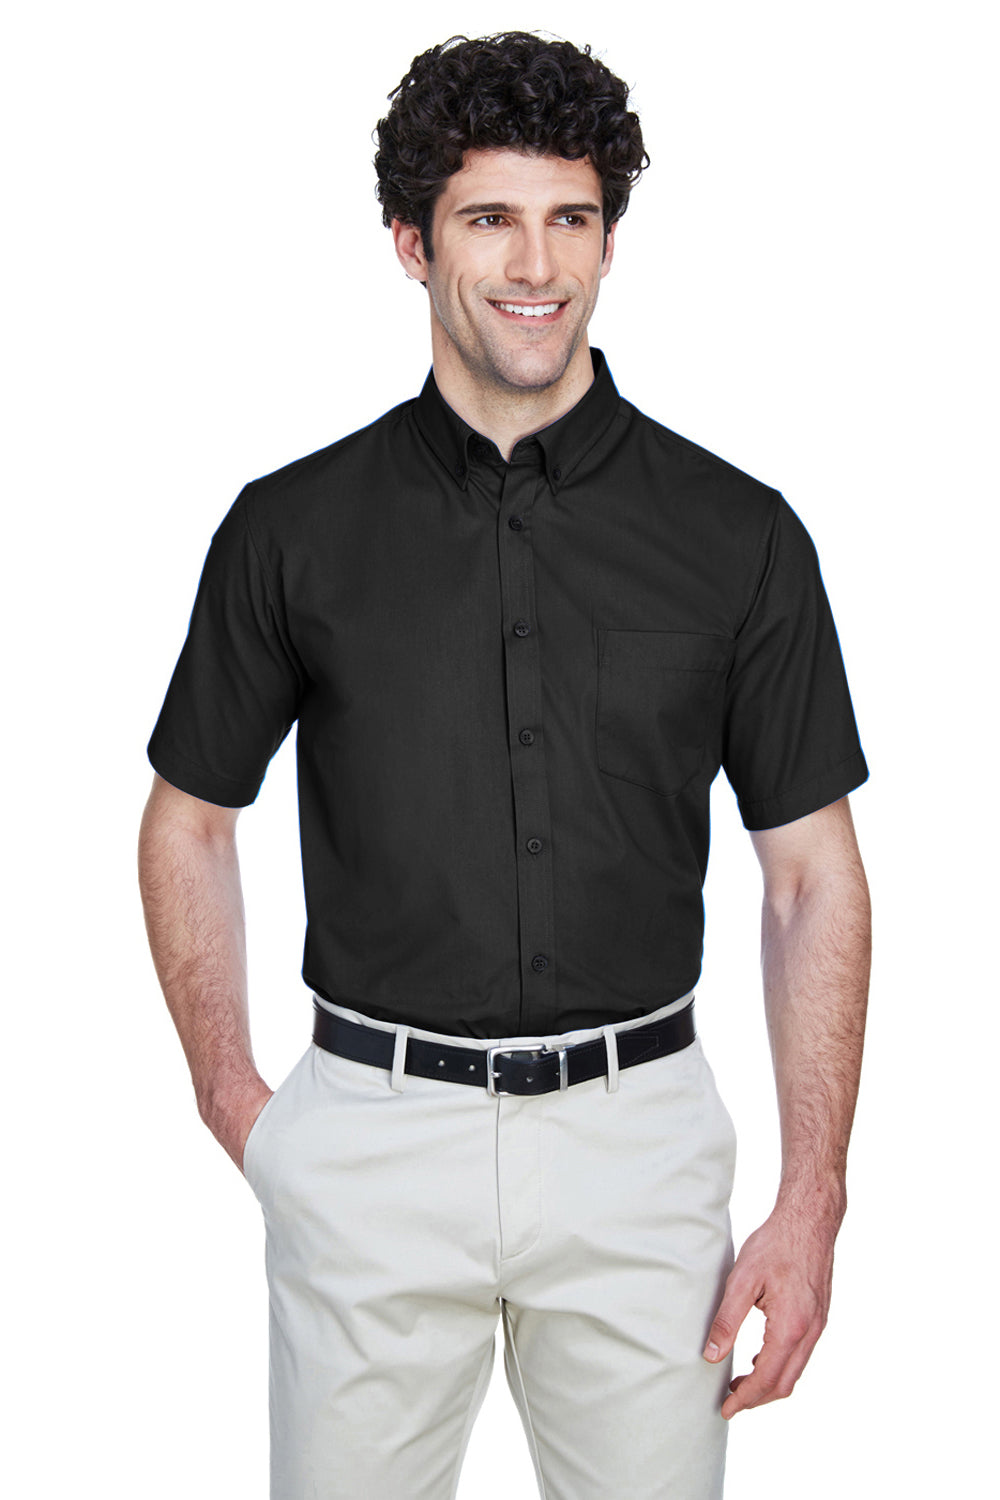 Core 365 88194 Mens Optimum Short Sleeve Button Down Shirt w/ Pocket Black Front